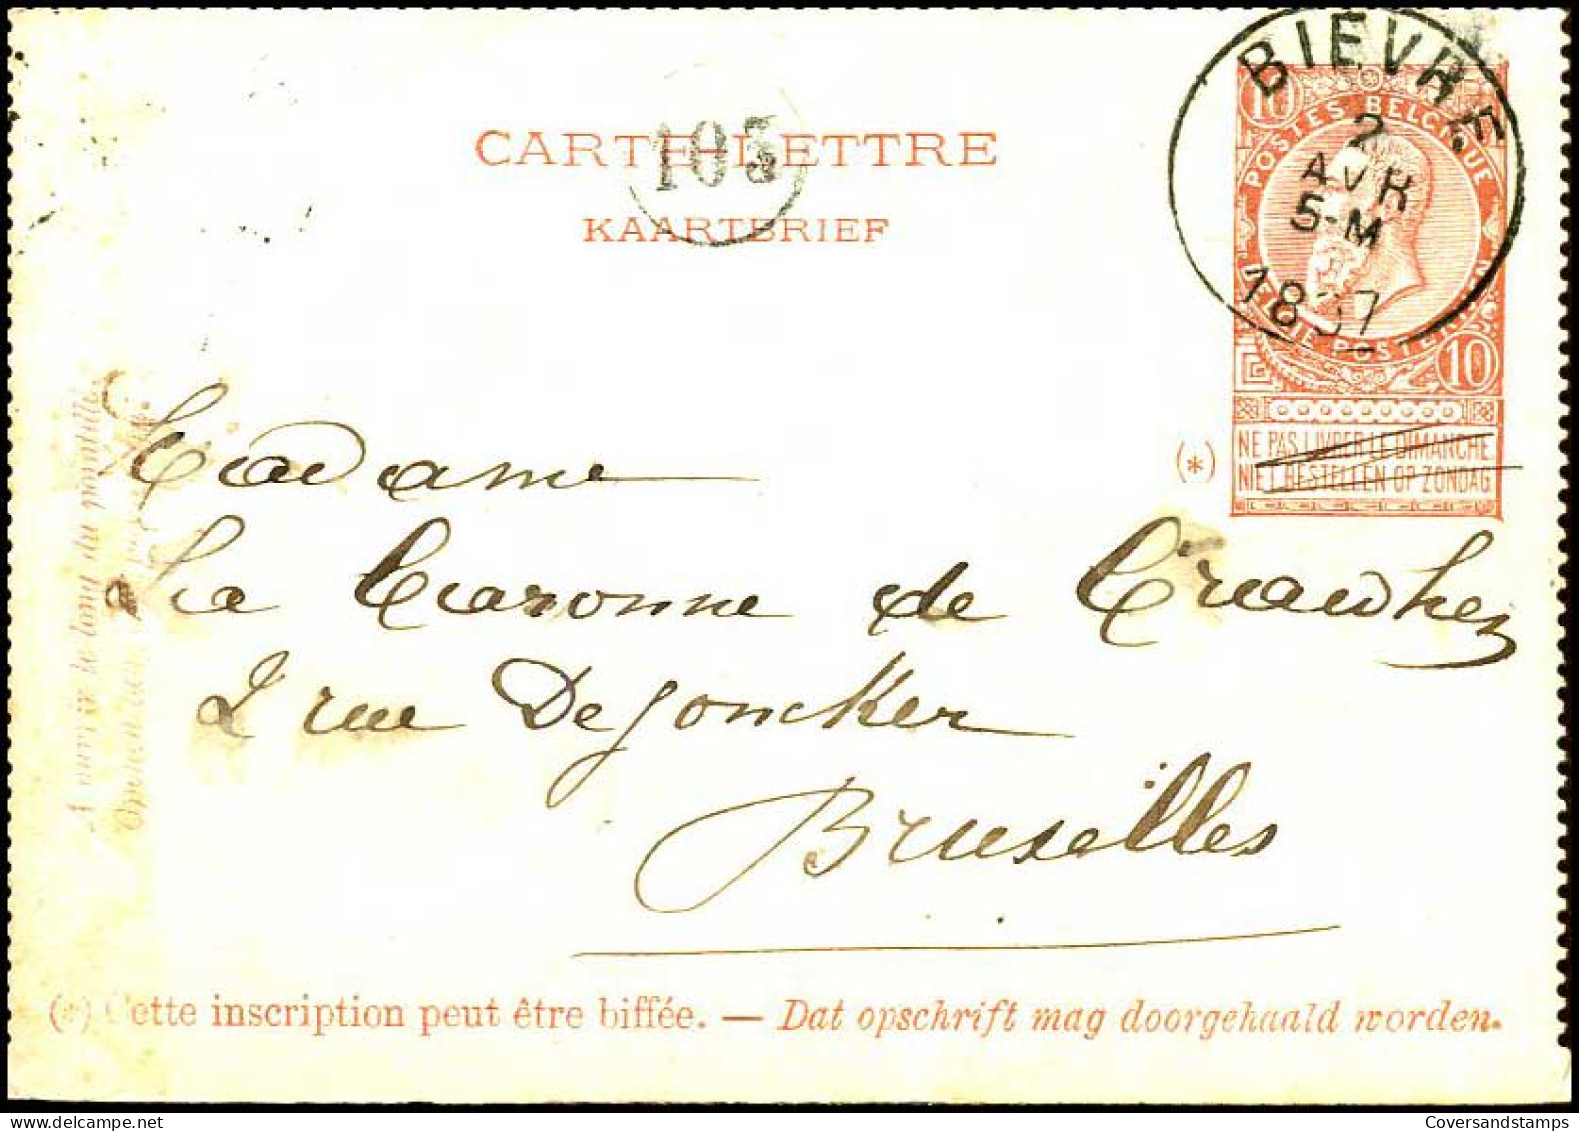 Kaartbrief / Carte-Lettre Front 1897 - Omslagbrieven